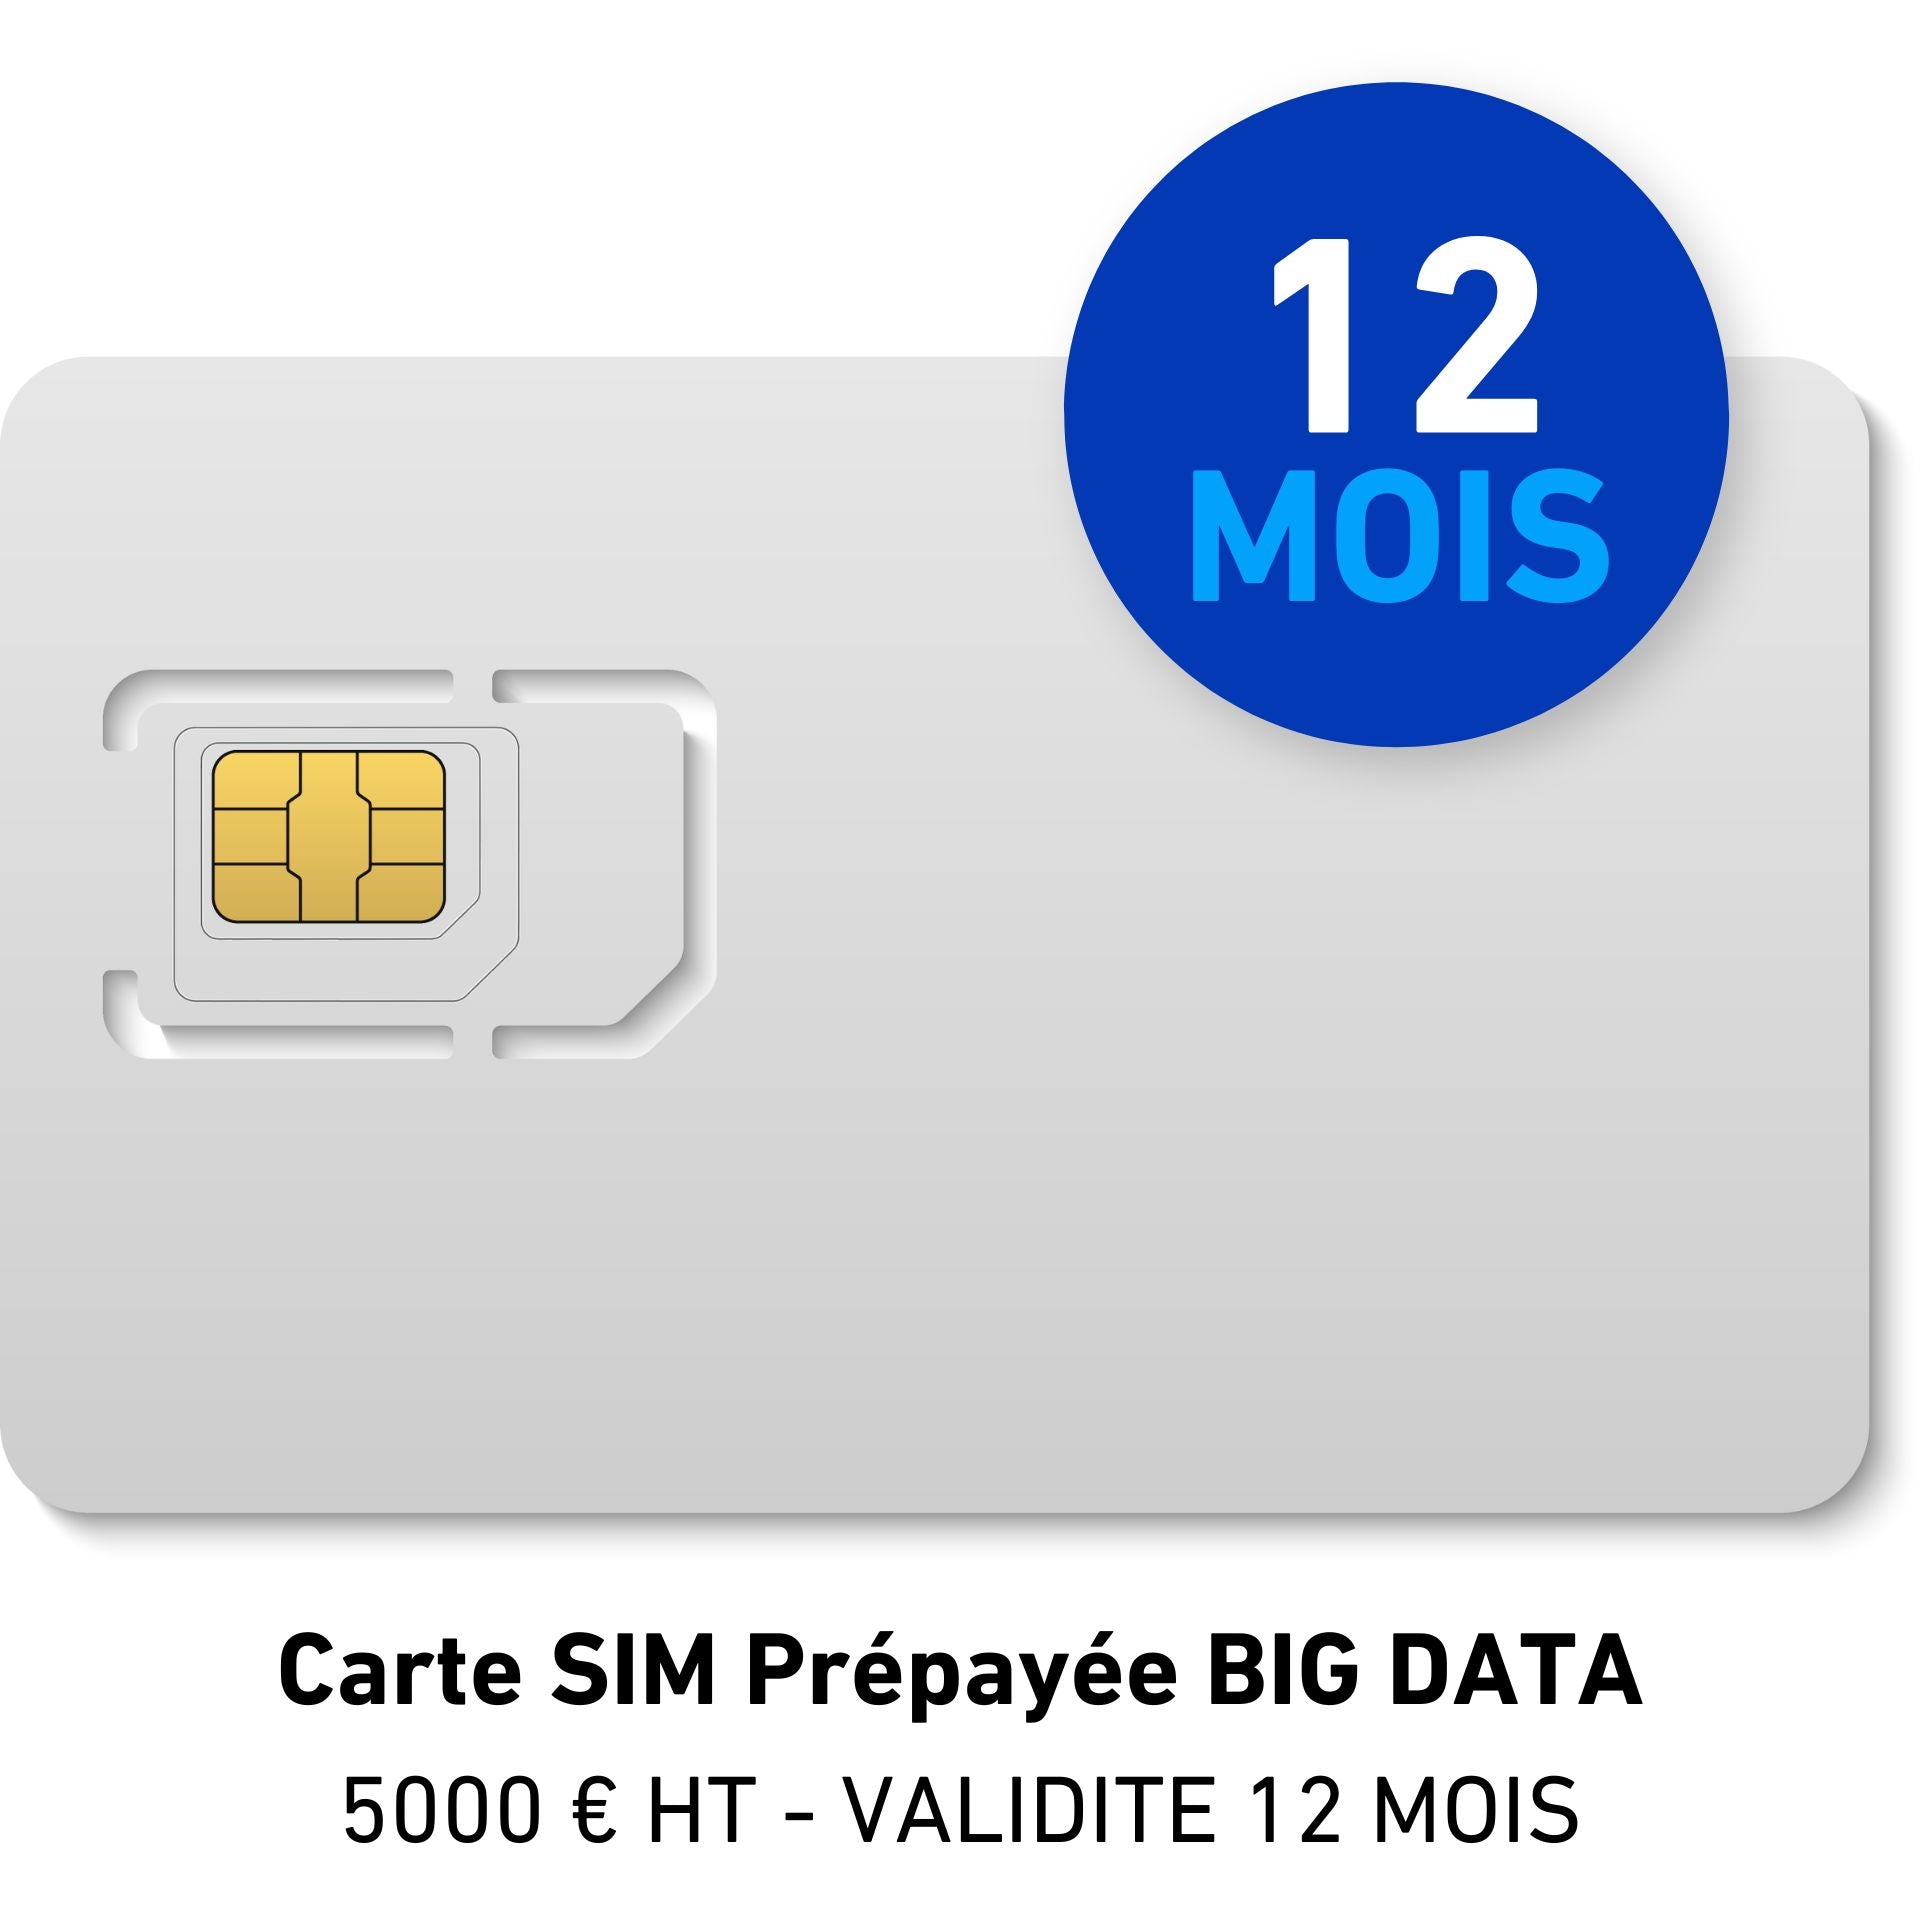 BIG DATA prepaid SIM card 5000 € HT - VALIDITY 12 MONTHS